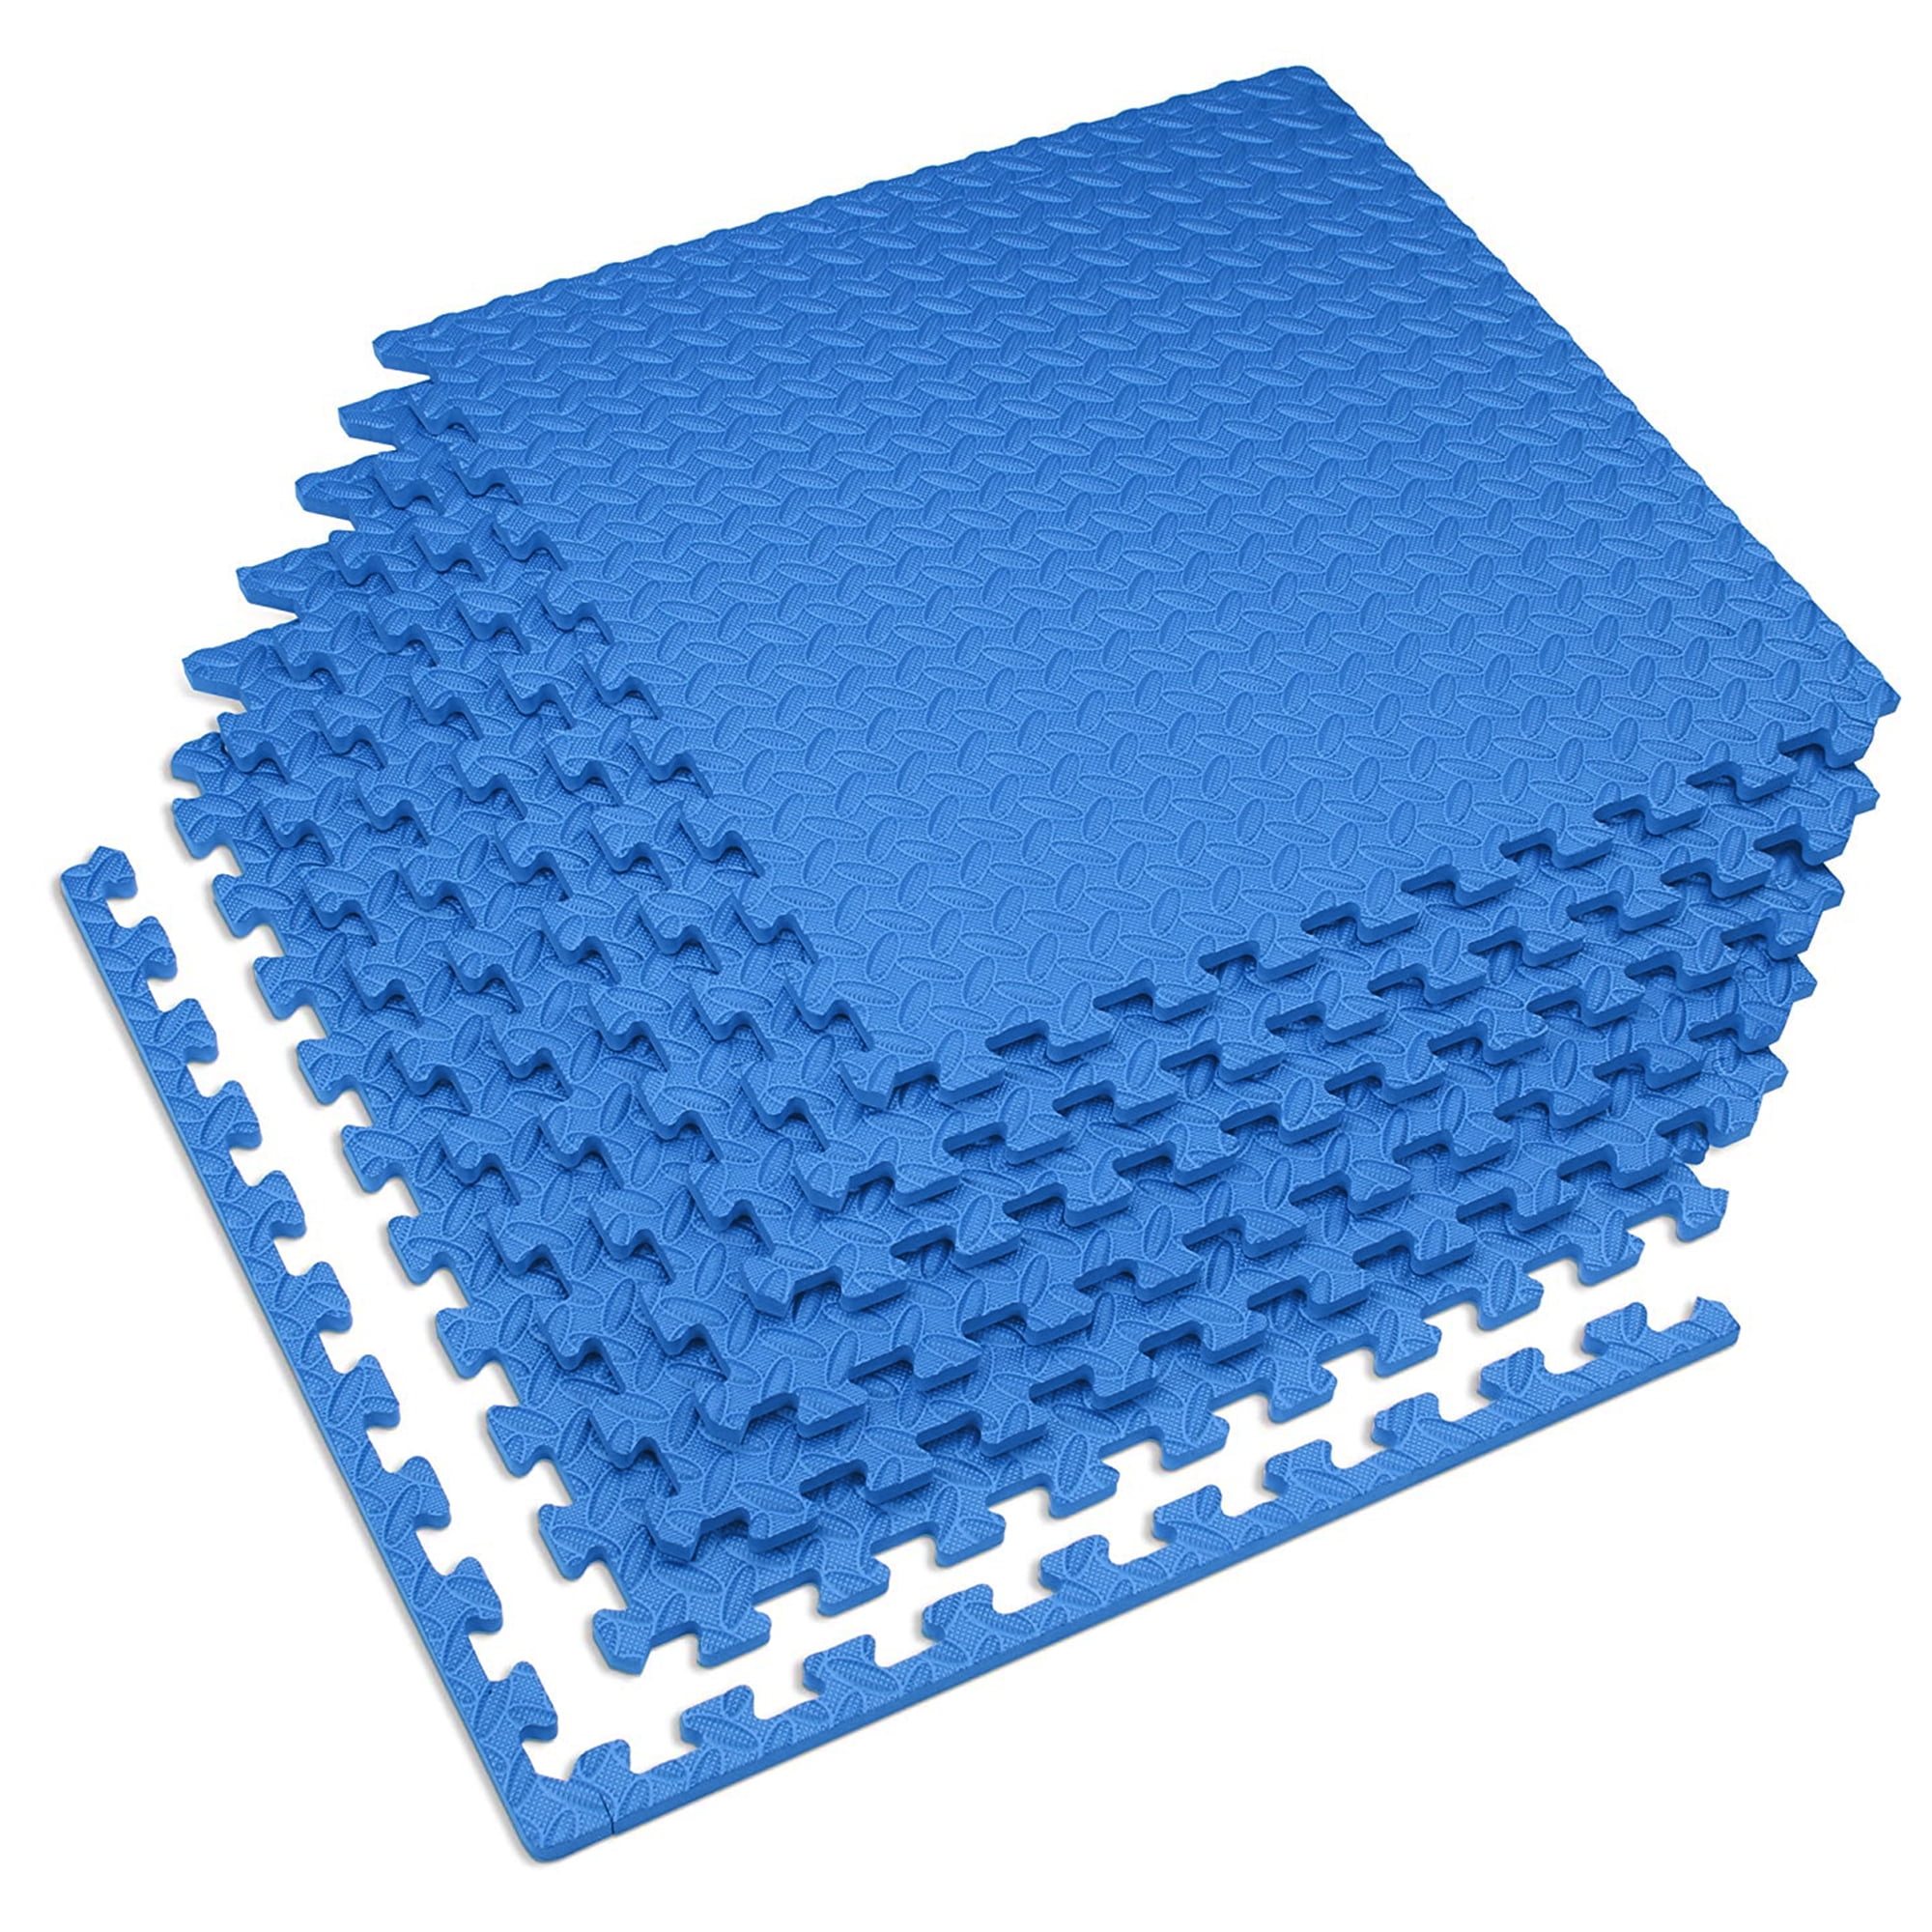 Philosophy Gym Pack of 30 Exercise Flooring Mats - 24 x 24 Inch Foam Rubber  Interlocking Puzzle Floor Tiles - Blue